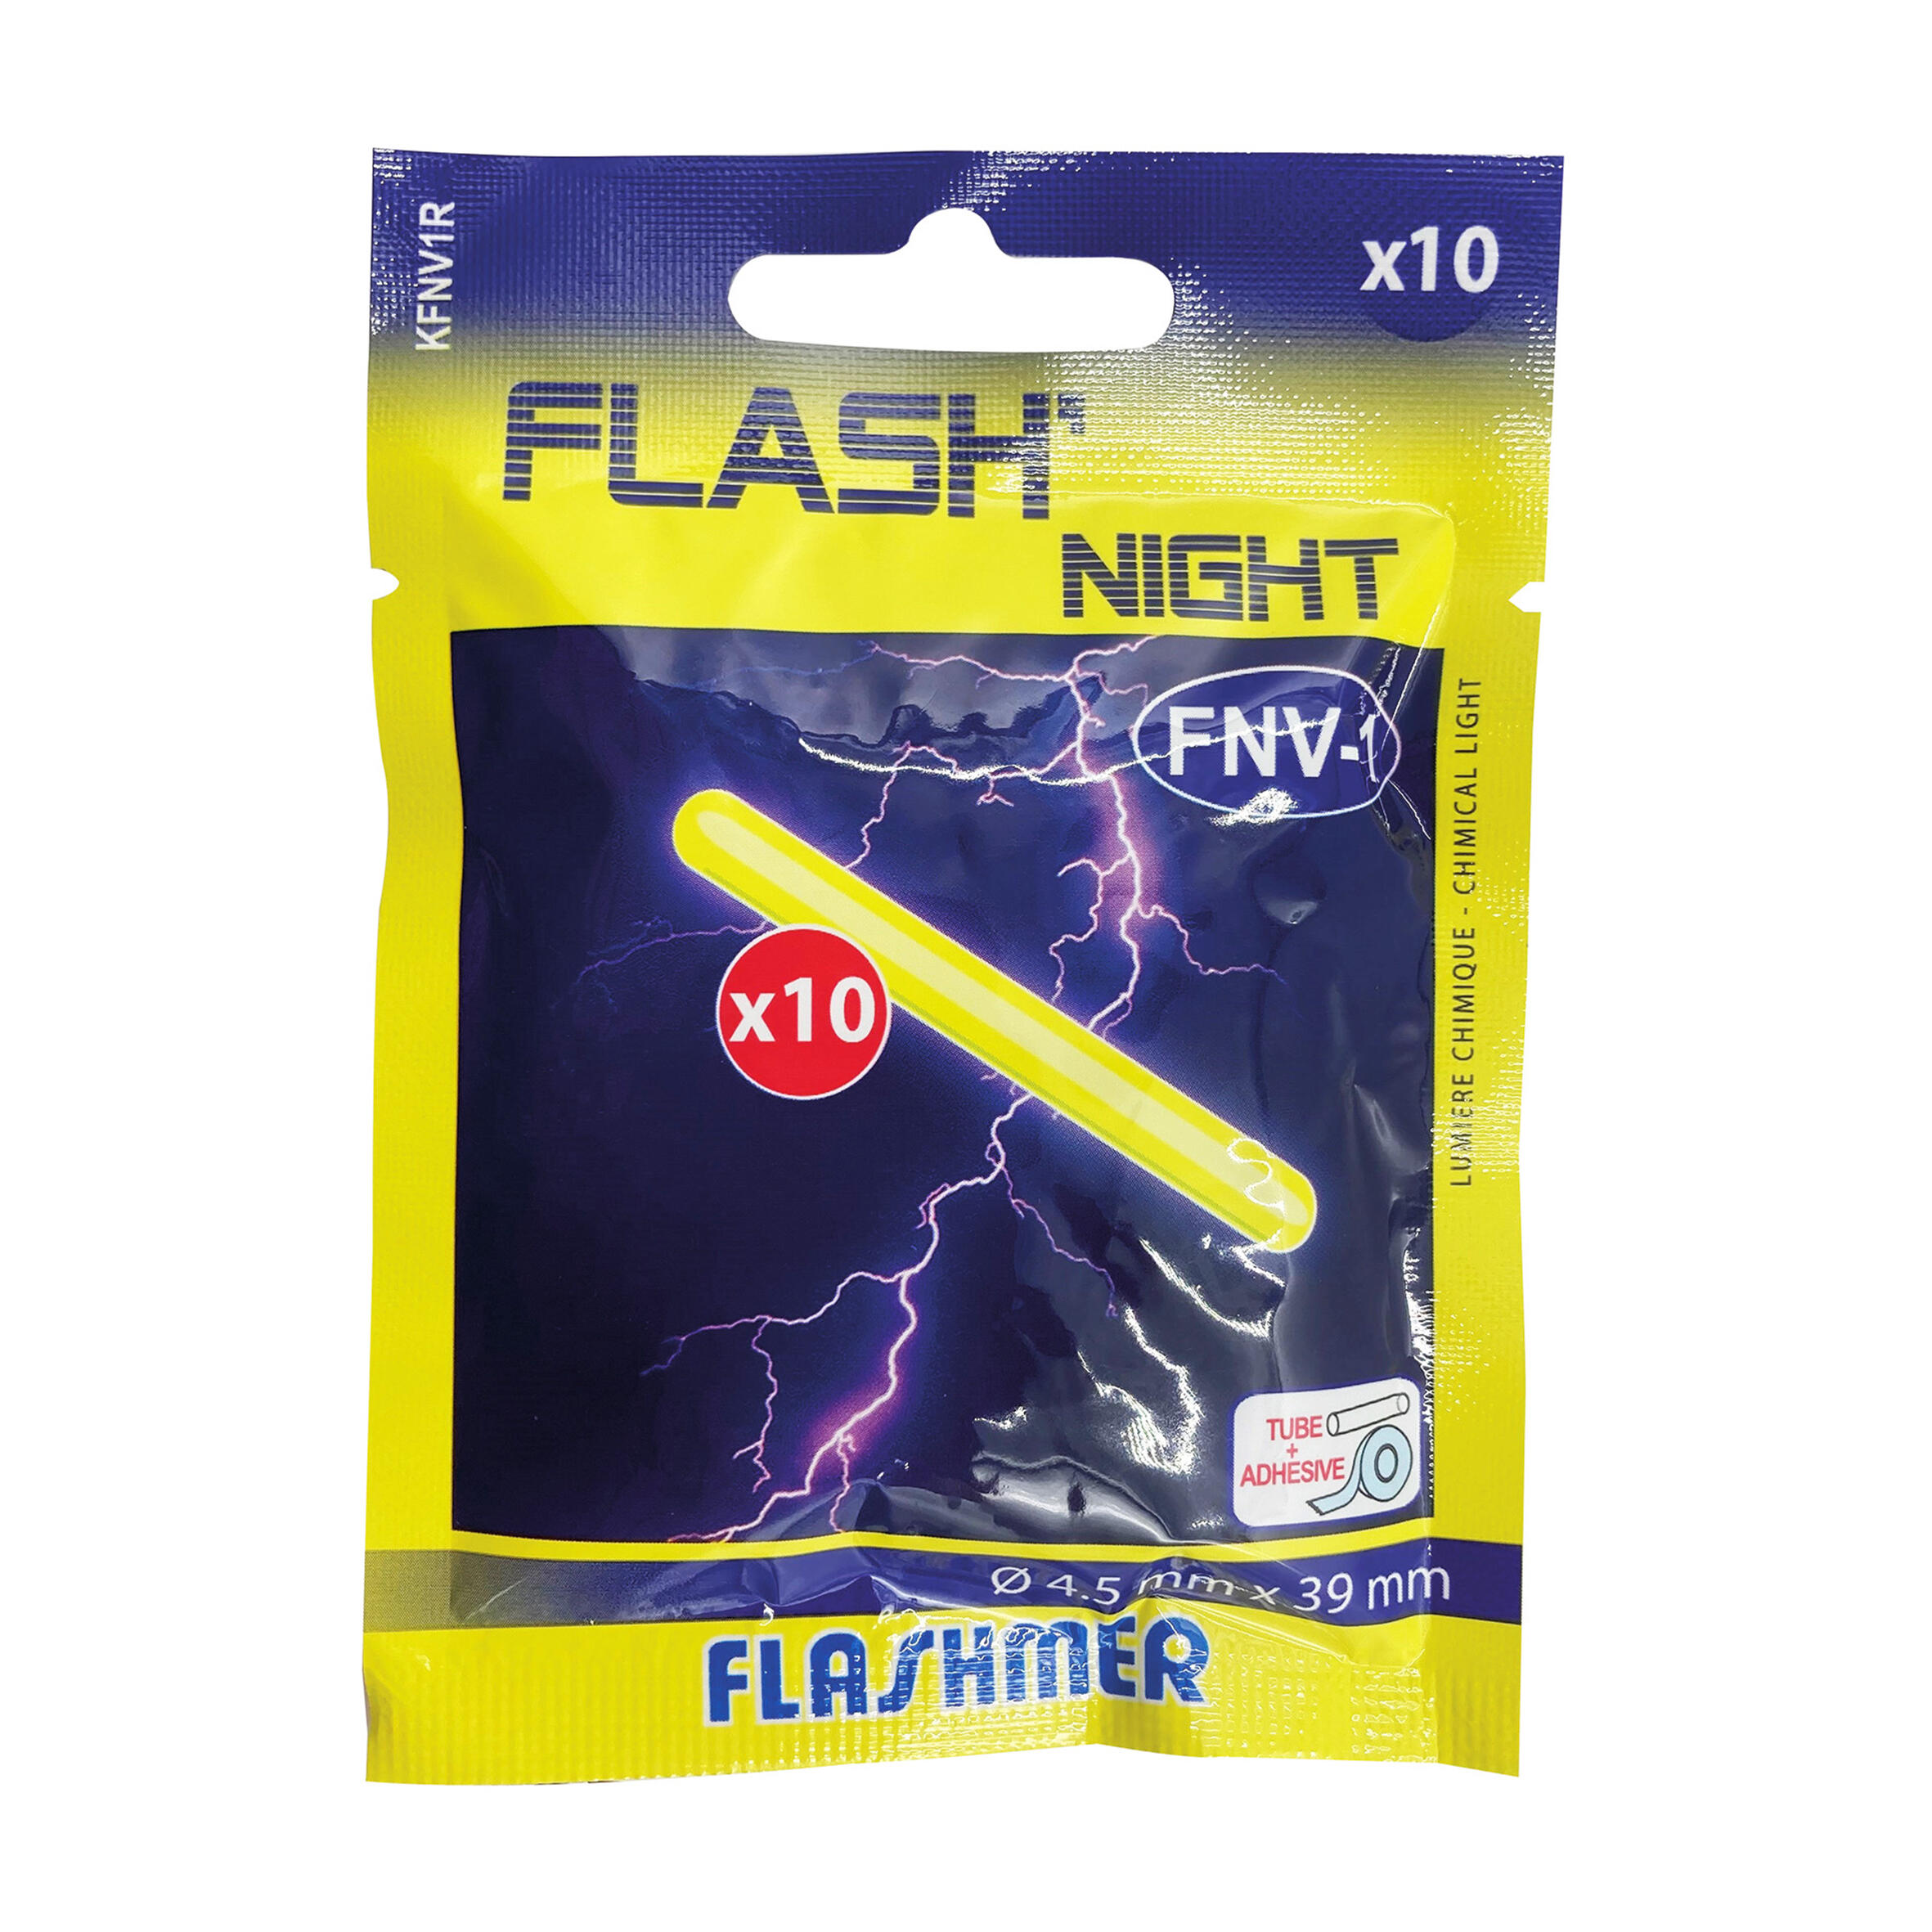 Świetliki Flashmer FNV-1 Flash Night T1 - 4,5 x39 mm X 10 sztuk